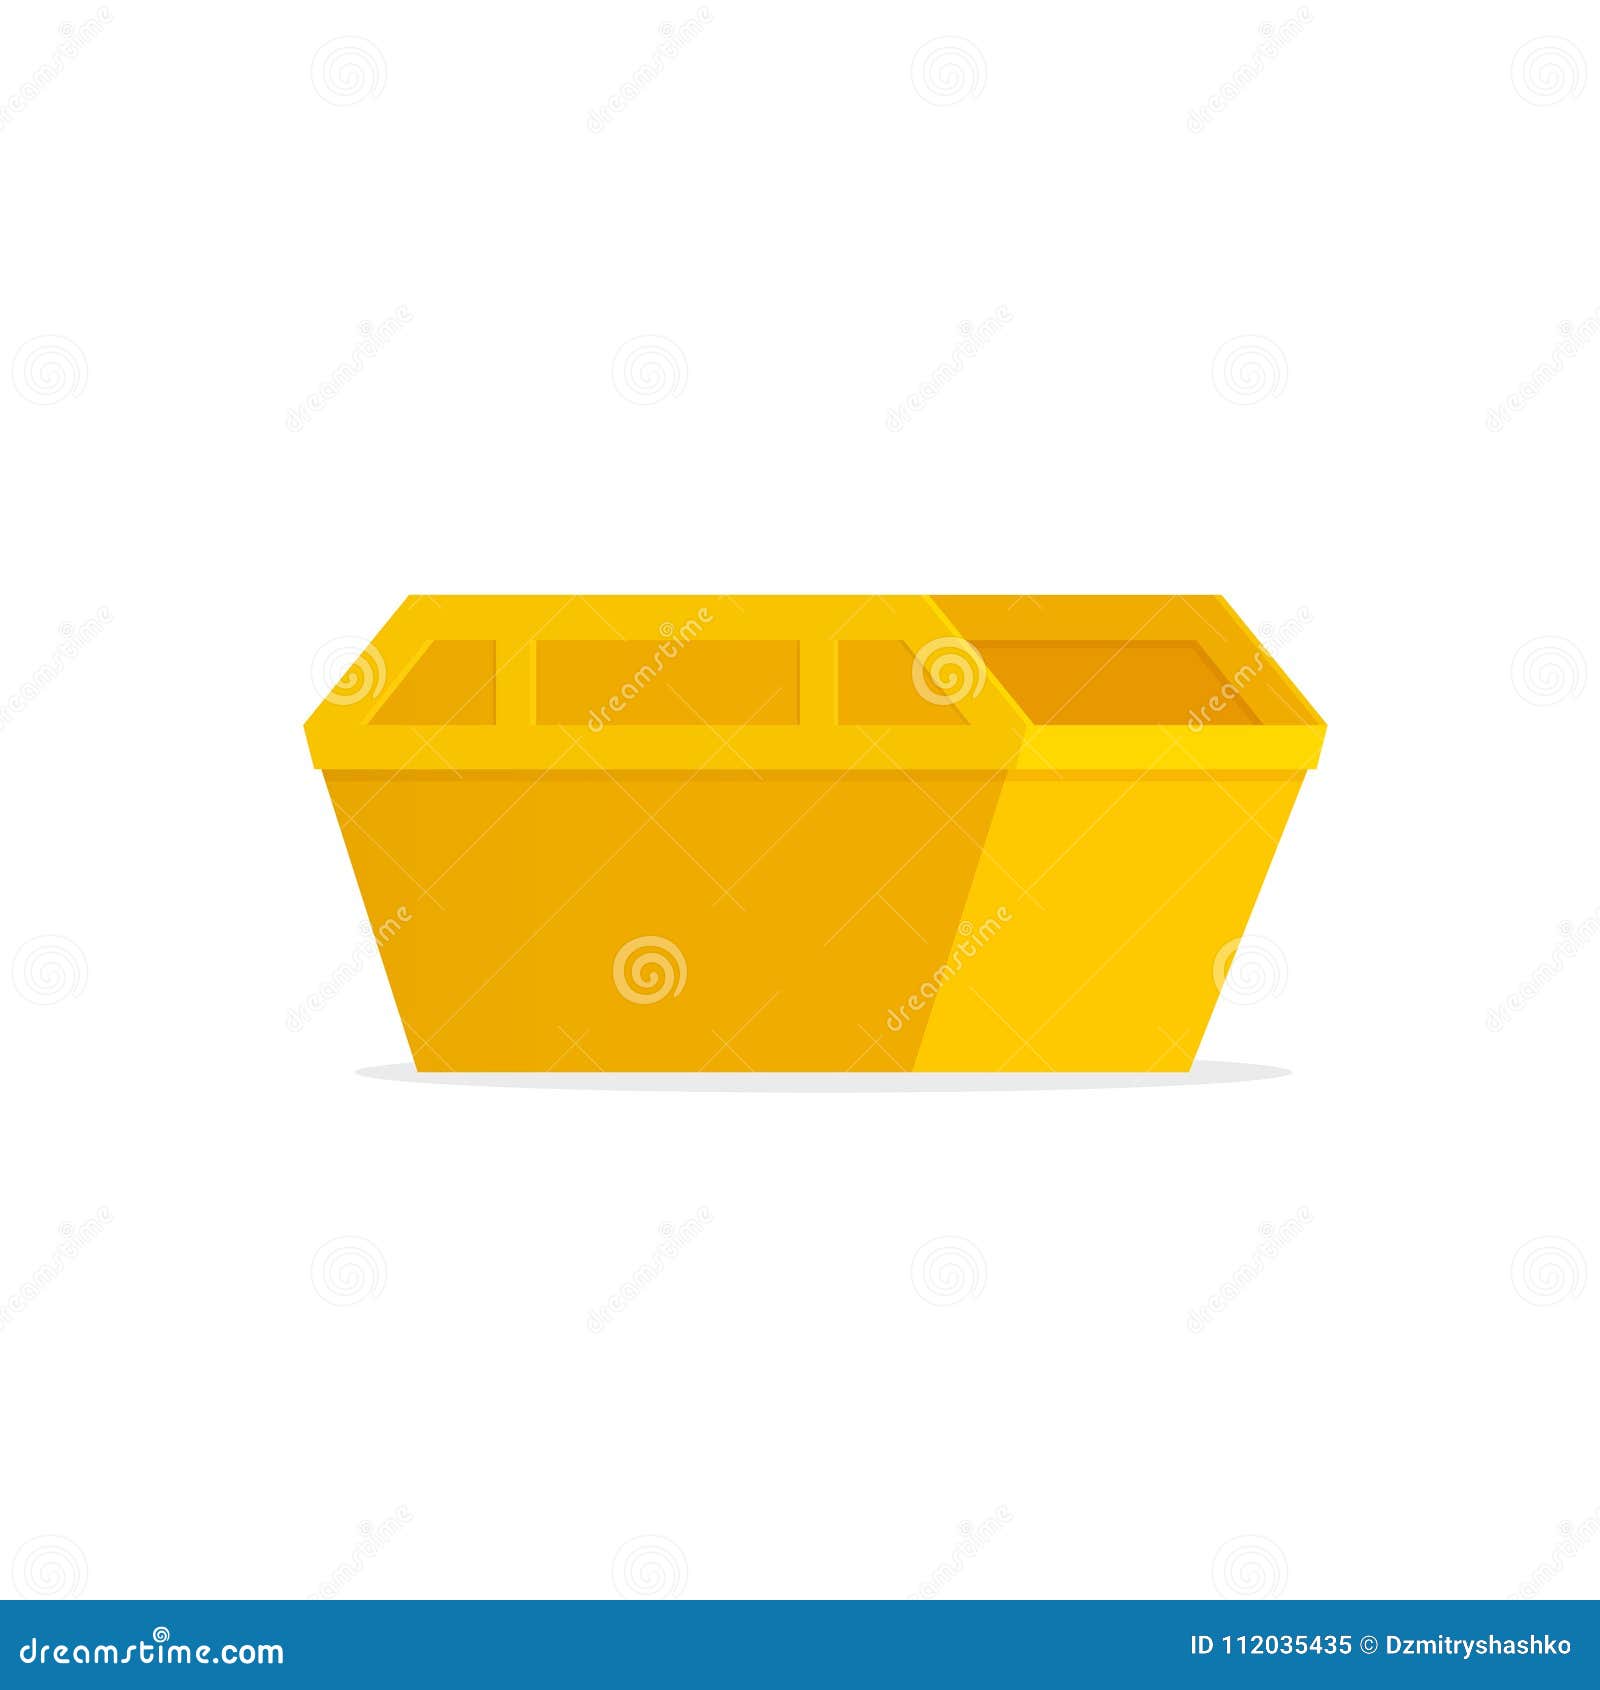 yellow waste skip bin